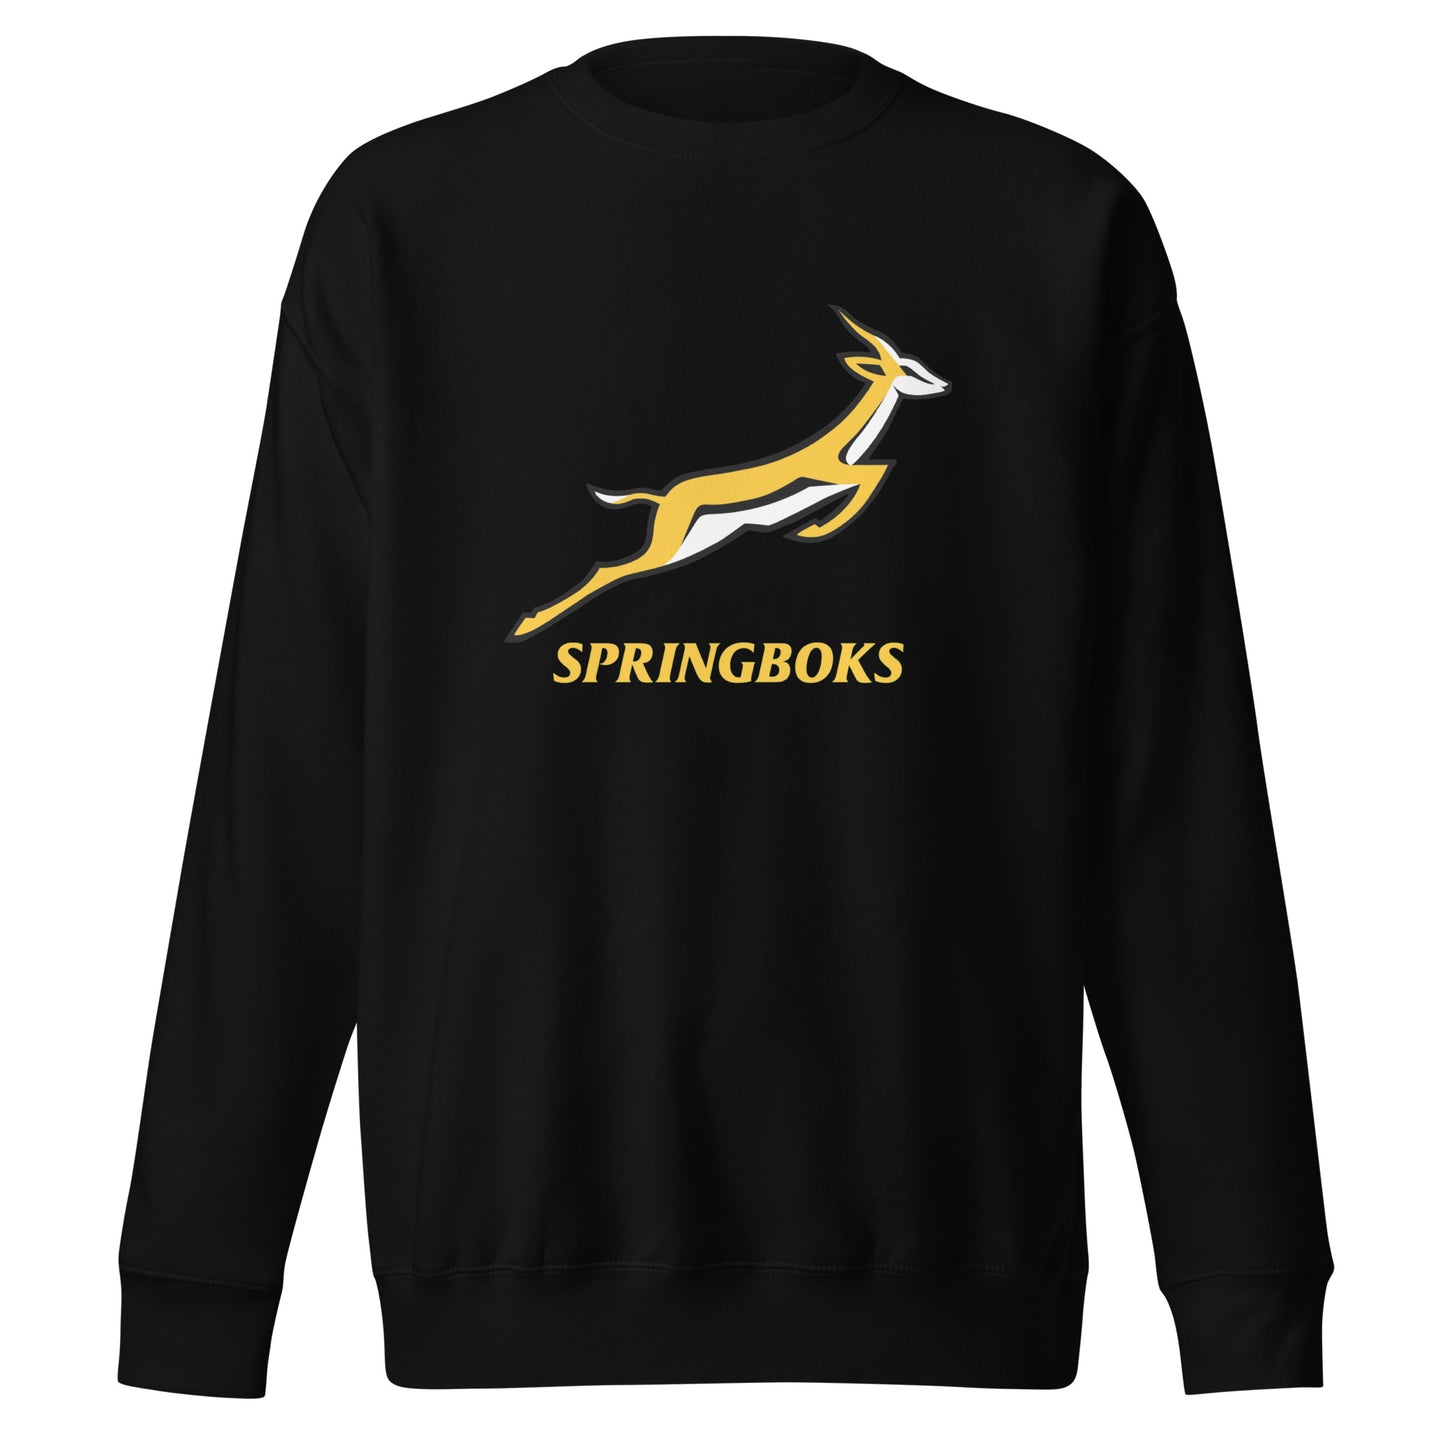 Unisex Springboks Supporters Sweatshirt